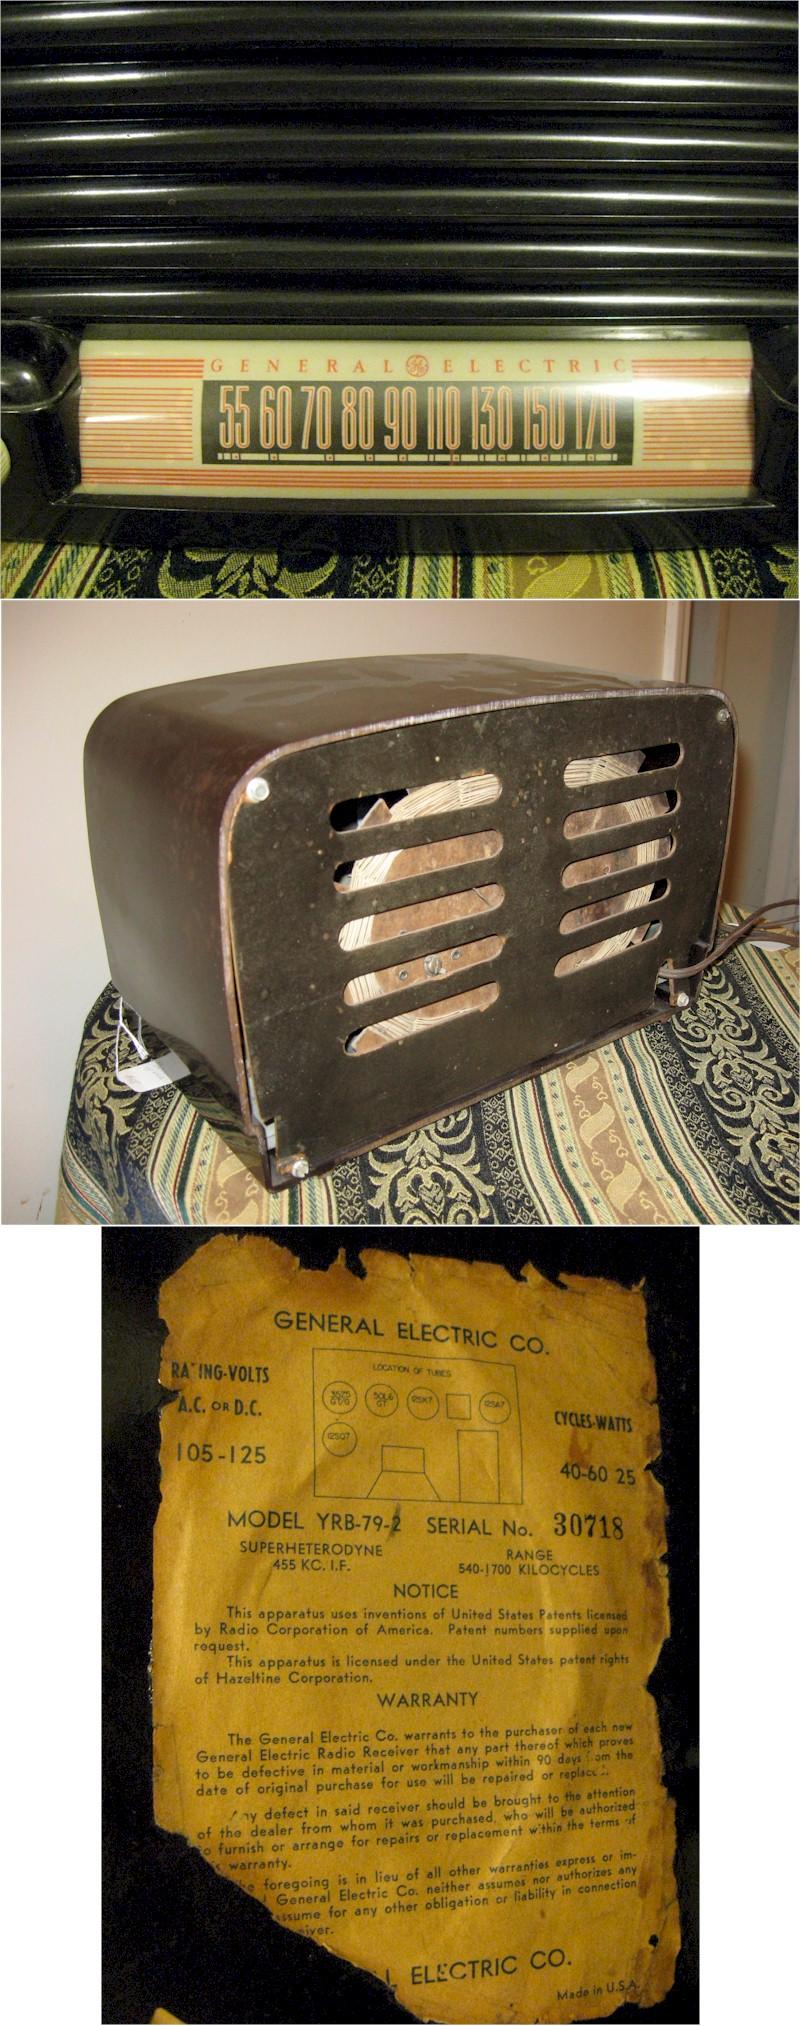 General Electric YRB-79-2 (1948)